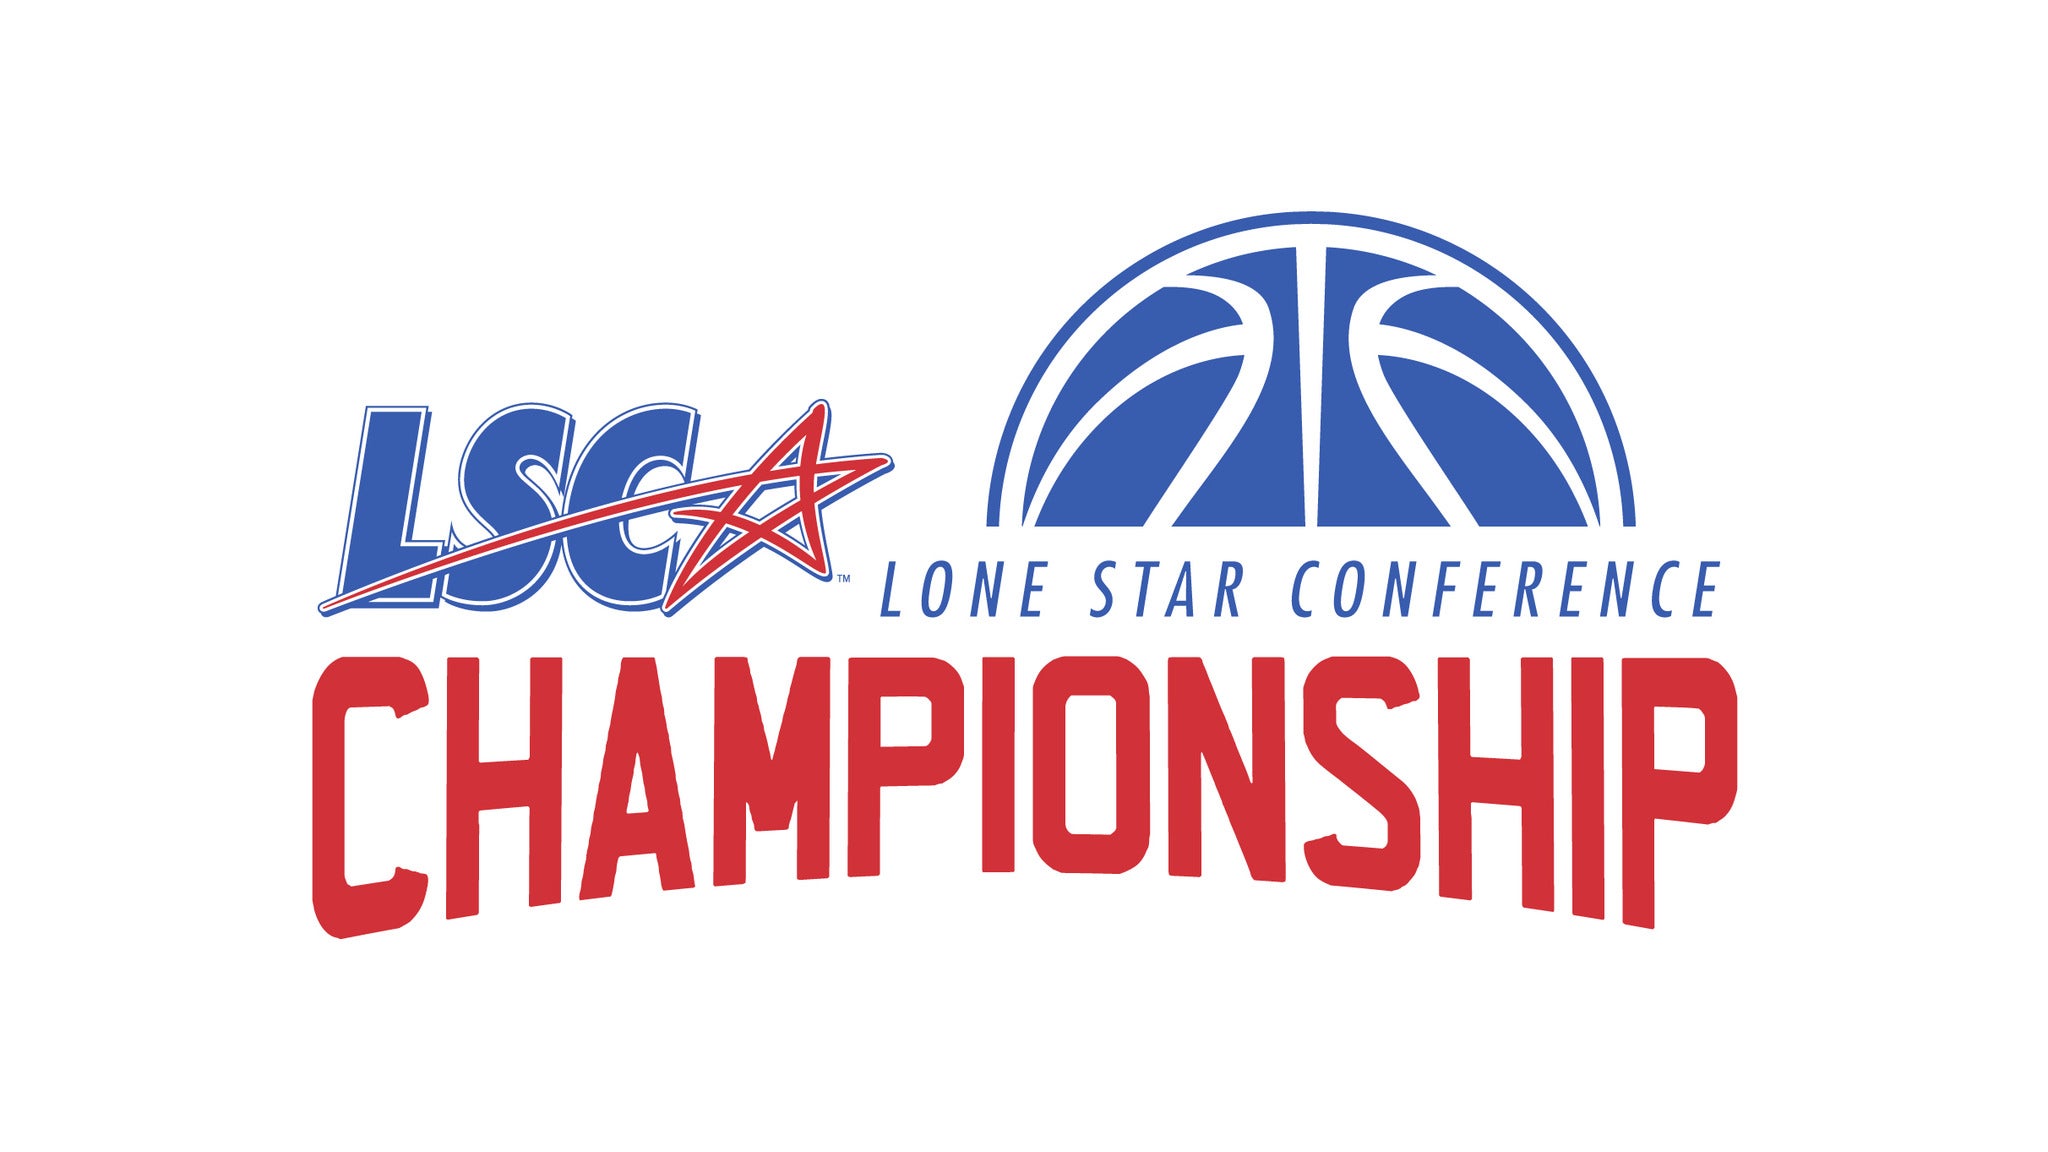 Lone Star Conference Championship presale information on freepresalepasswords.com